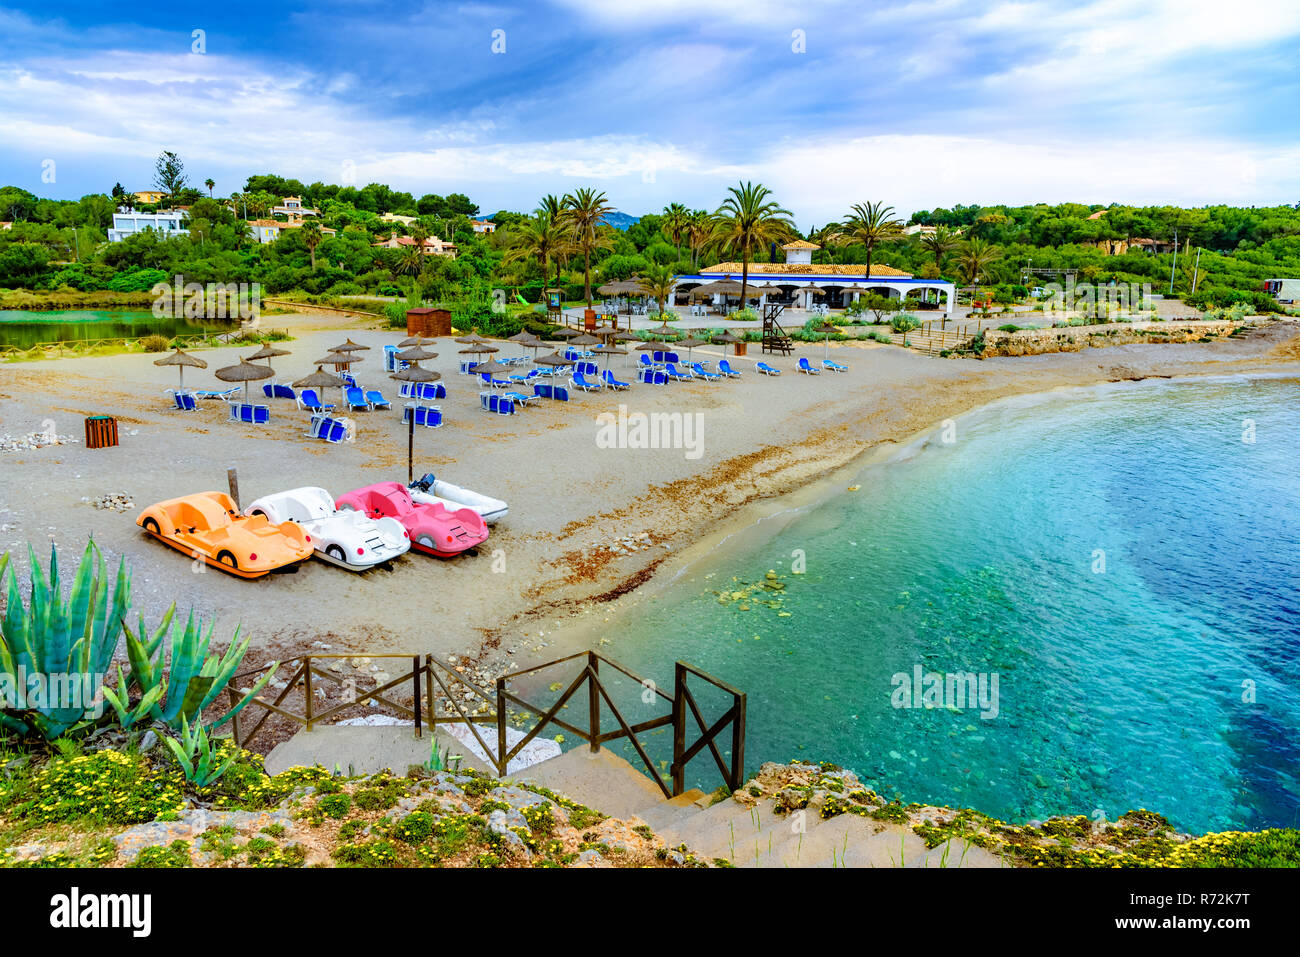 Cala Murada beach resort, in summer holiday, Palma de Mallorca island, Spain Stock Photo